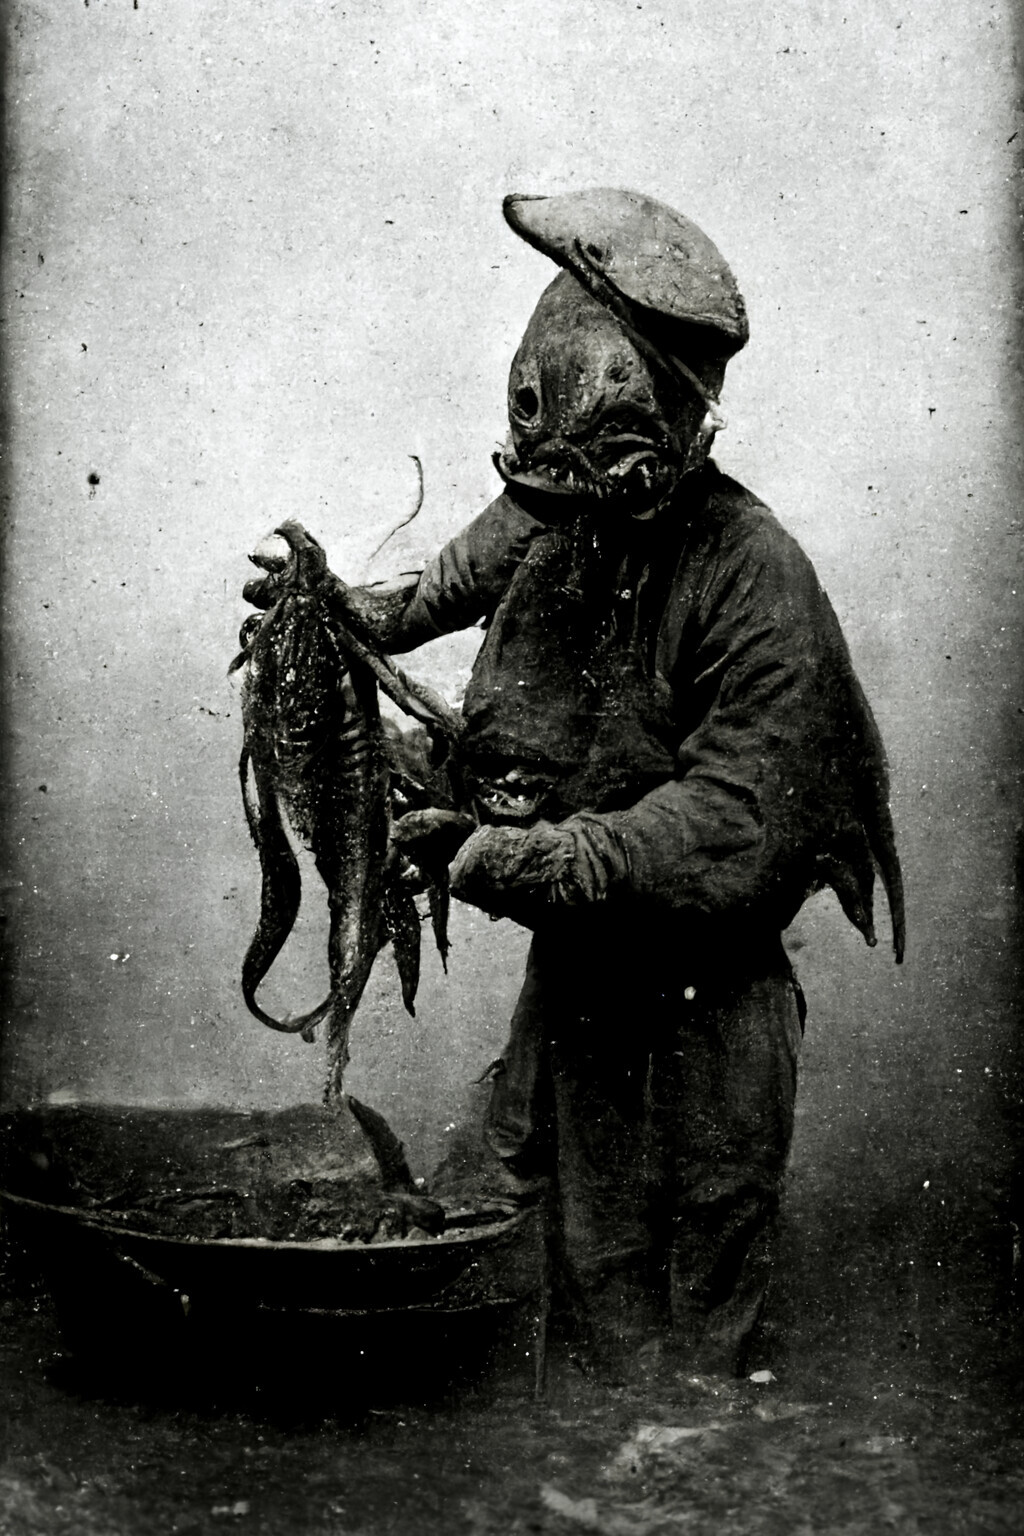 Megashrimp trapper
c. 1909
Photograph, ambrotype